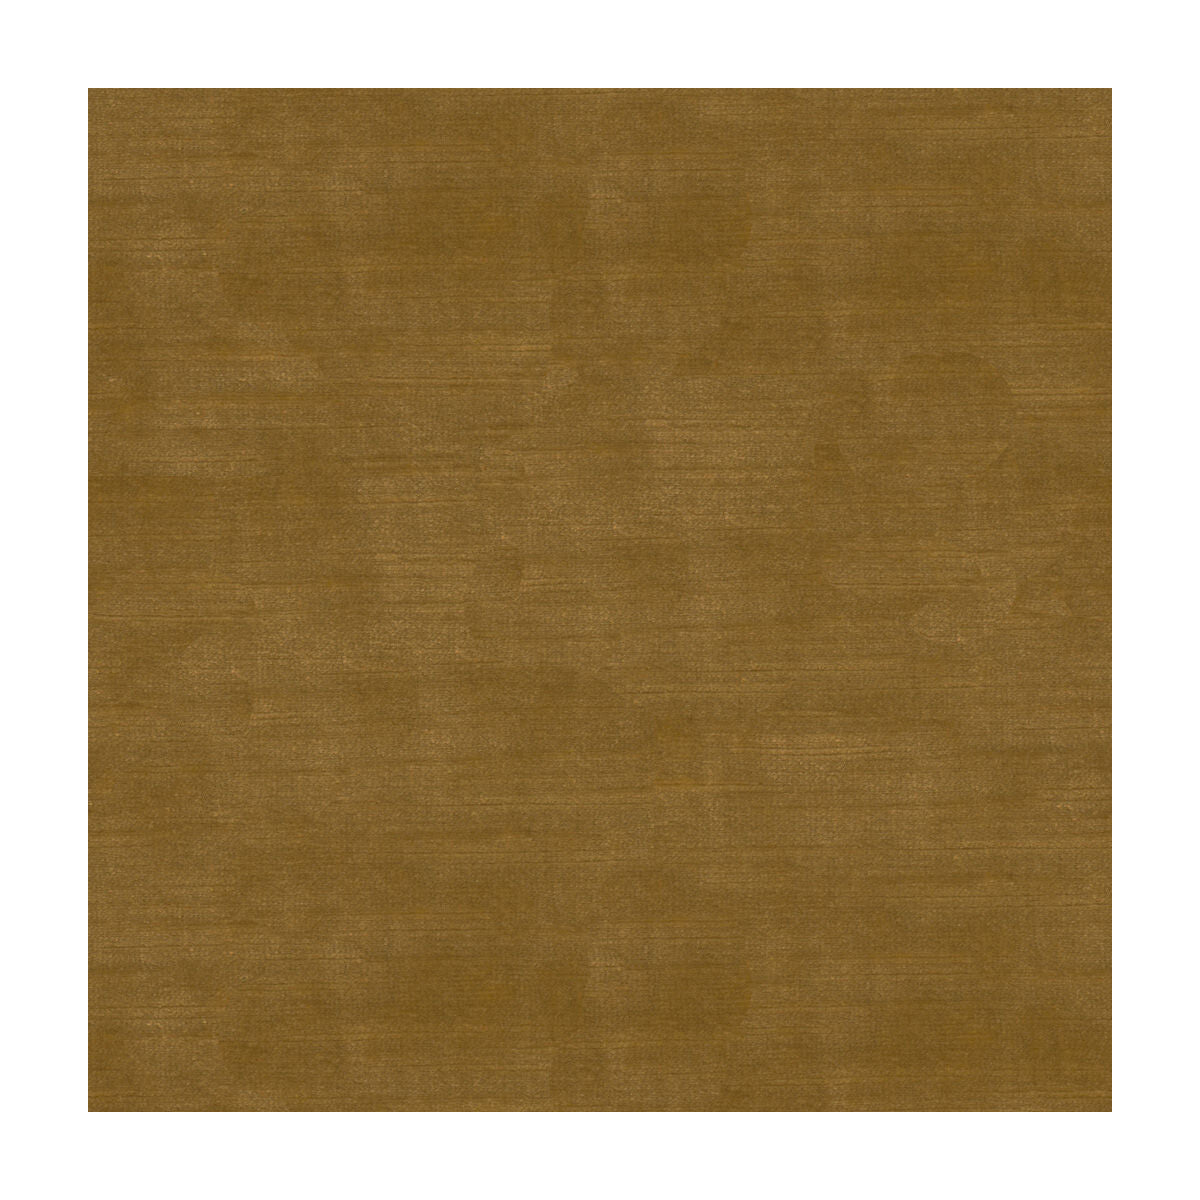 Lazare Velvet fabric in honey color - pattern 8016103.4.0 - by Brunschwig &amp; Fils